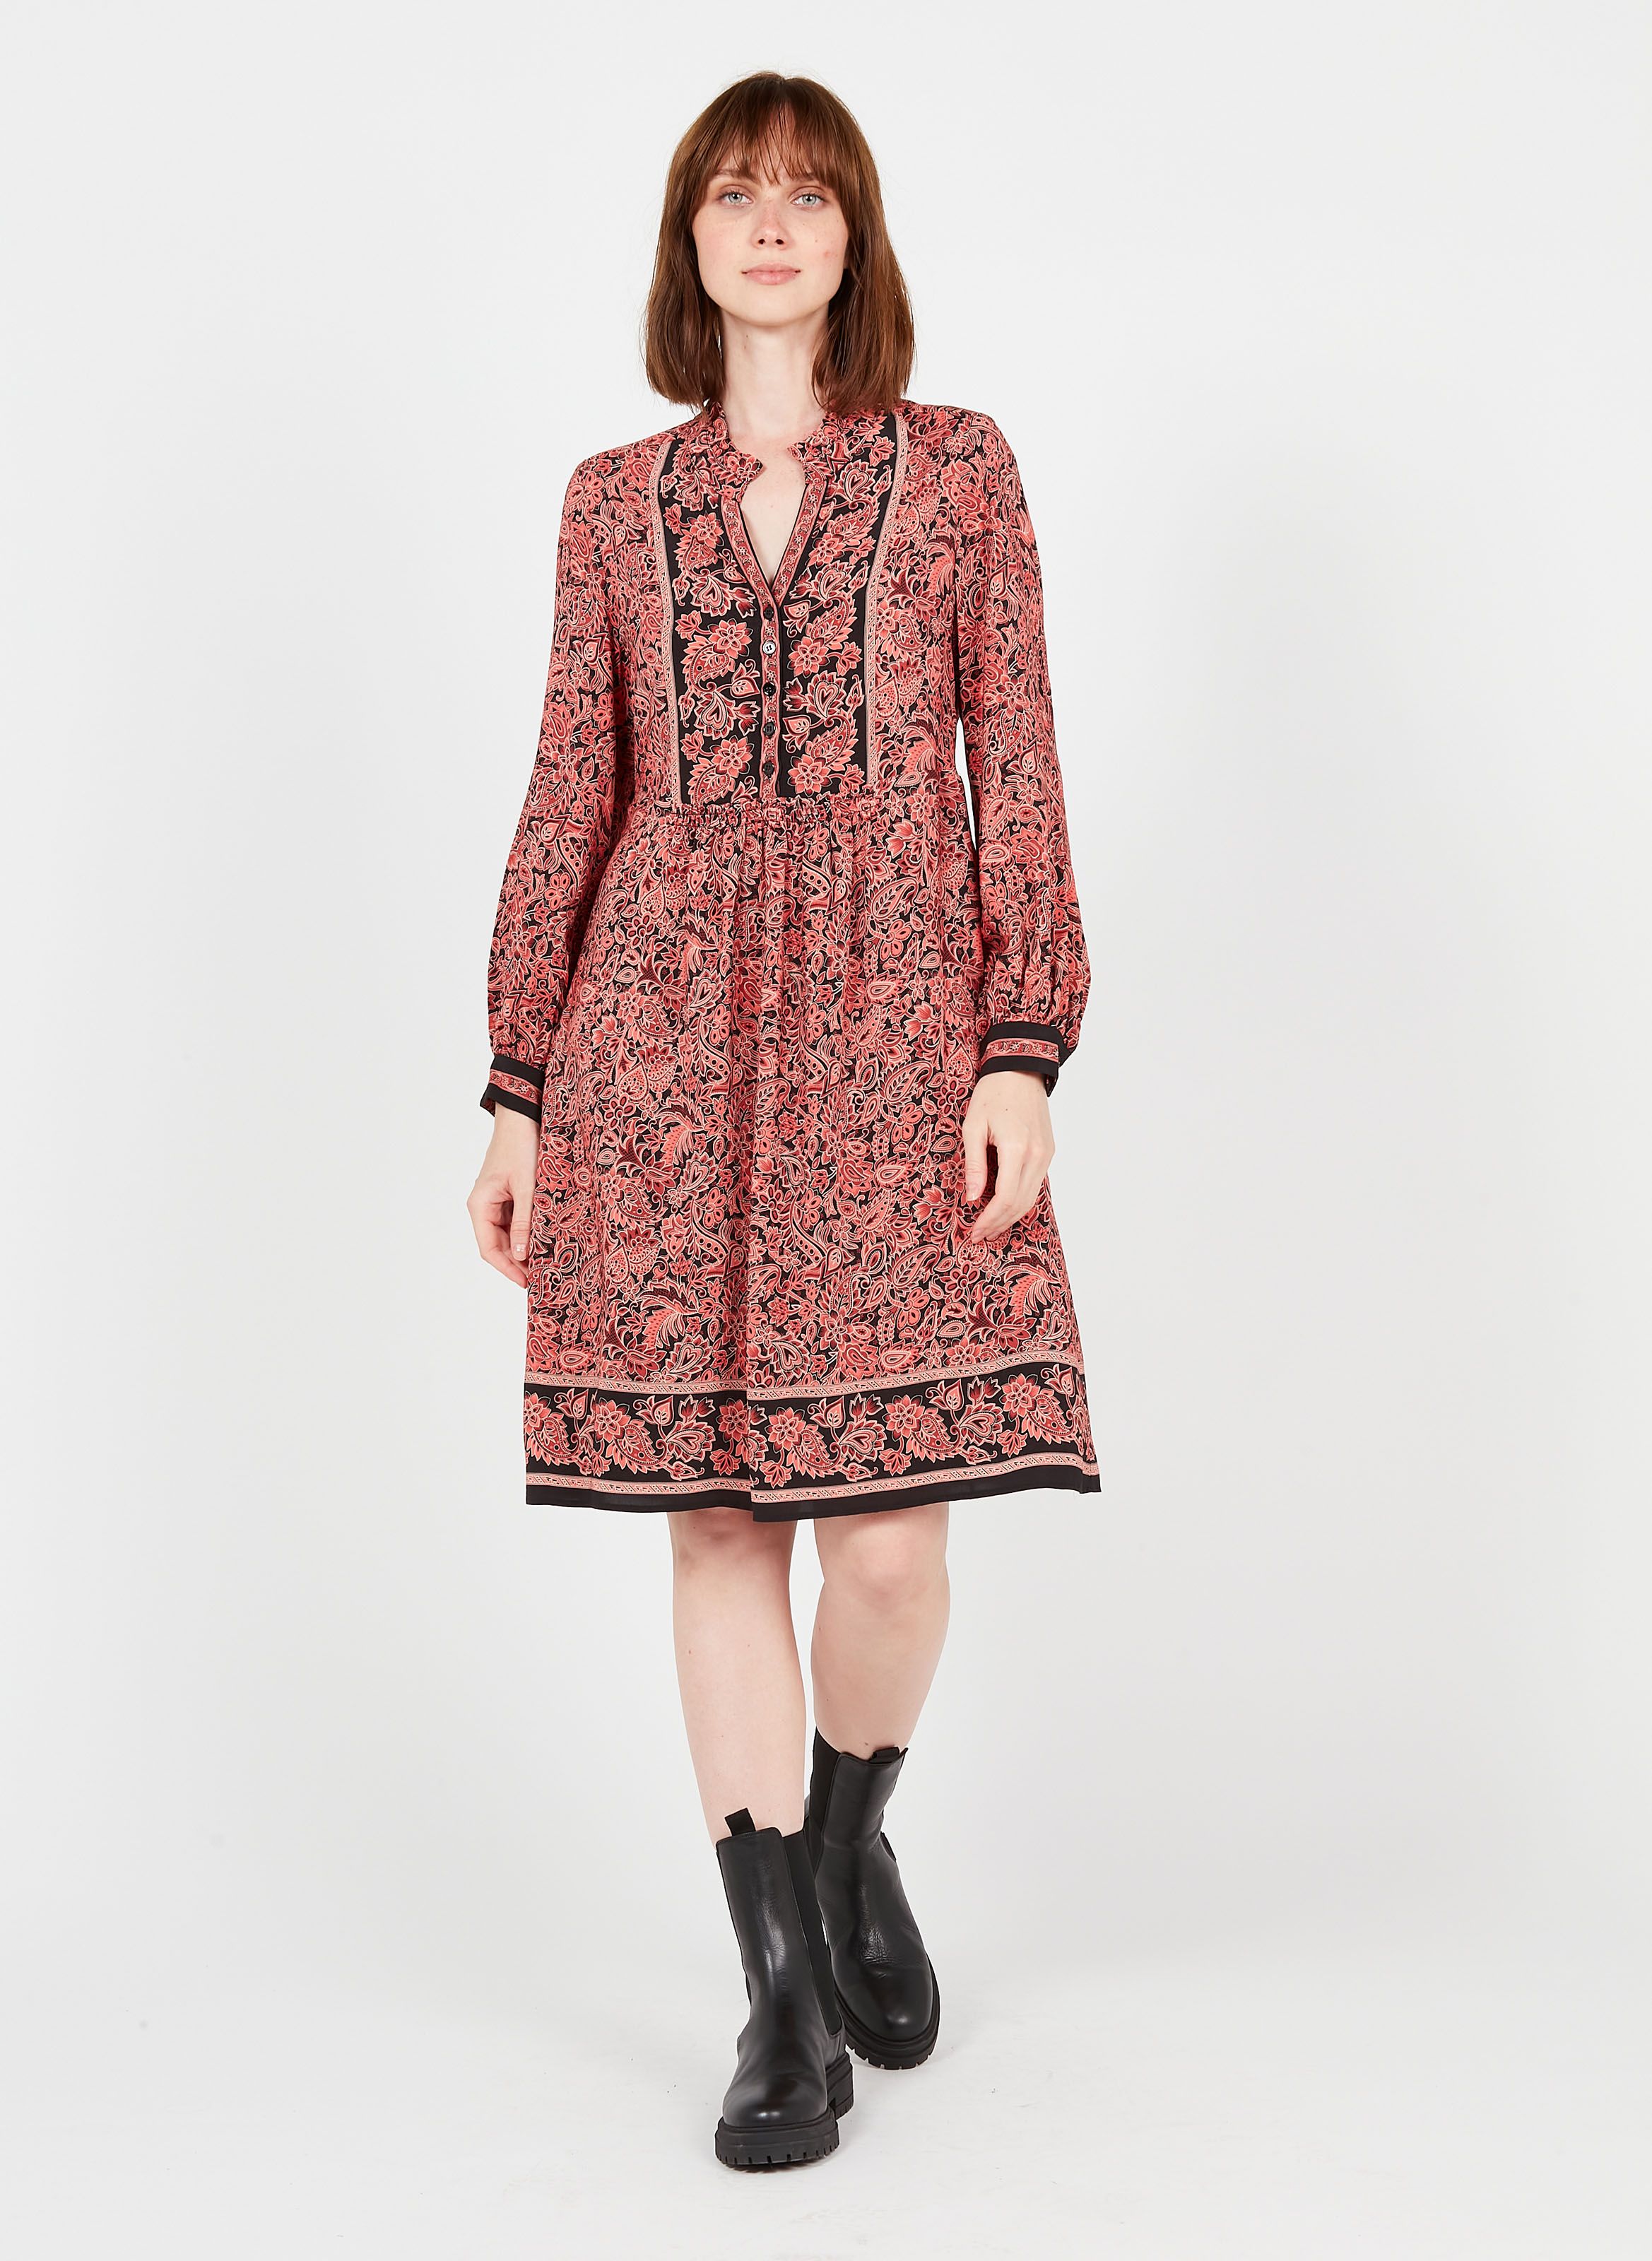 Dresses Gerard Darel Women: New Collection Online | Place des 